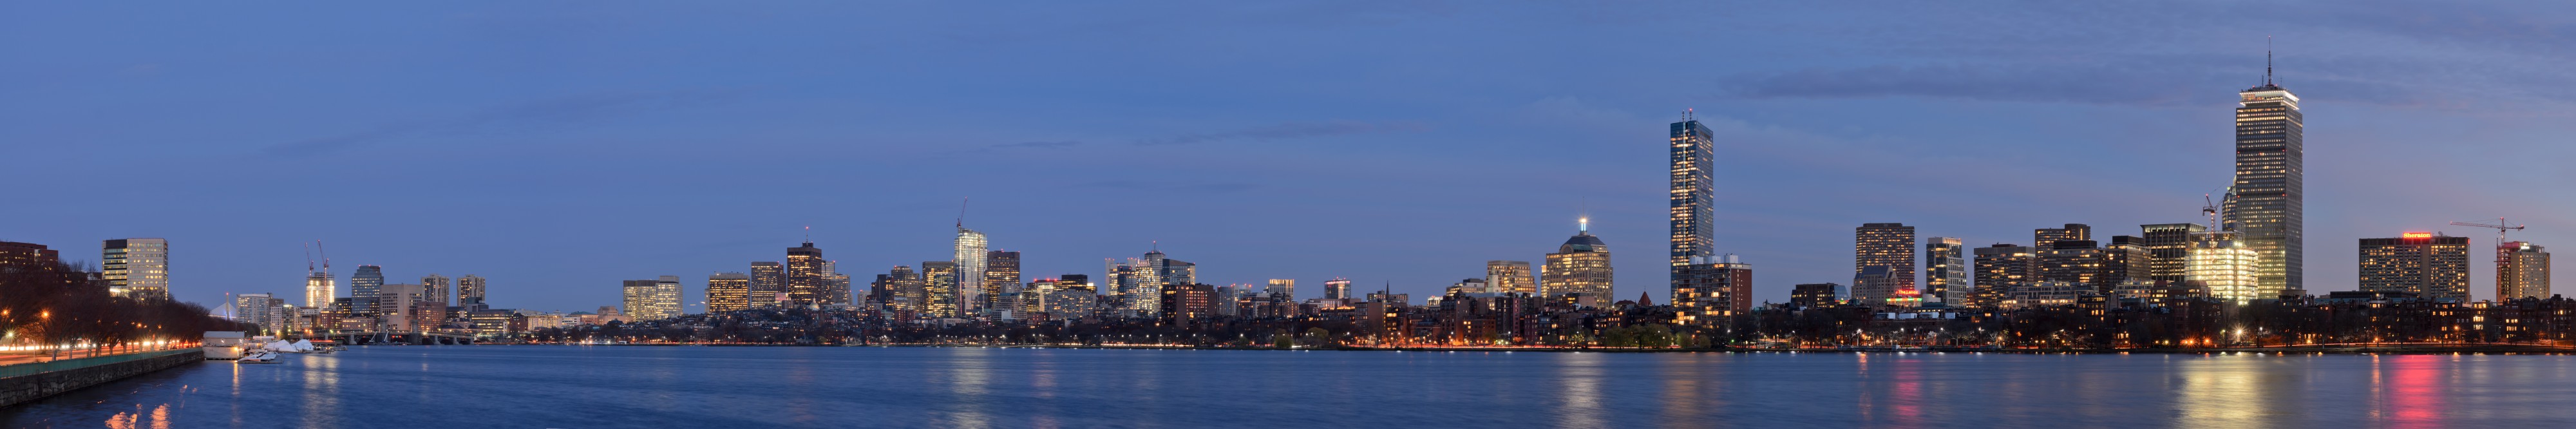 Boston skyline from Cambridge November 2015 panorama 2